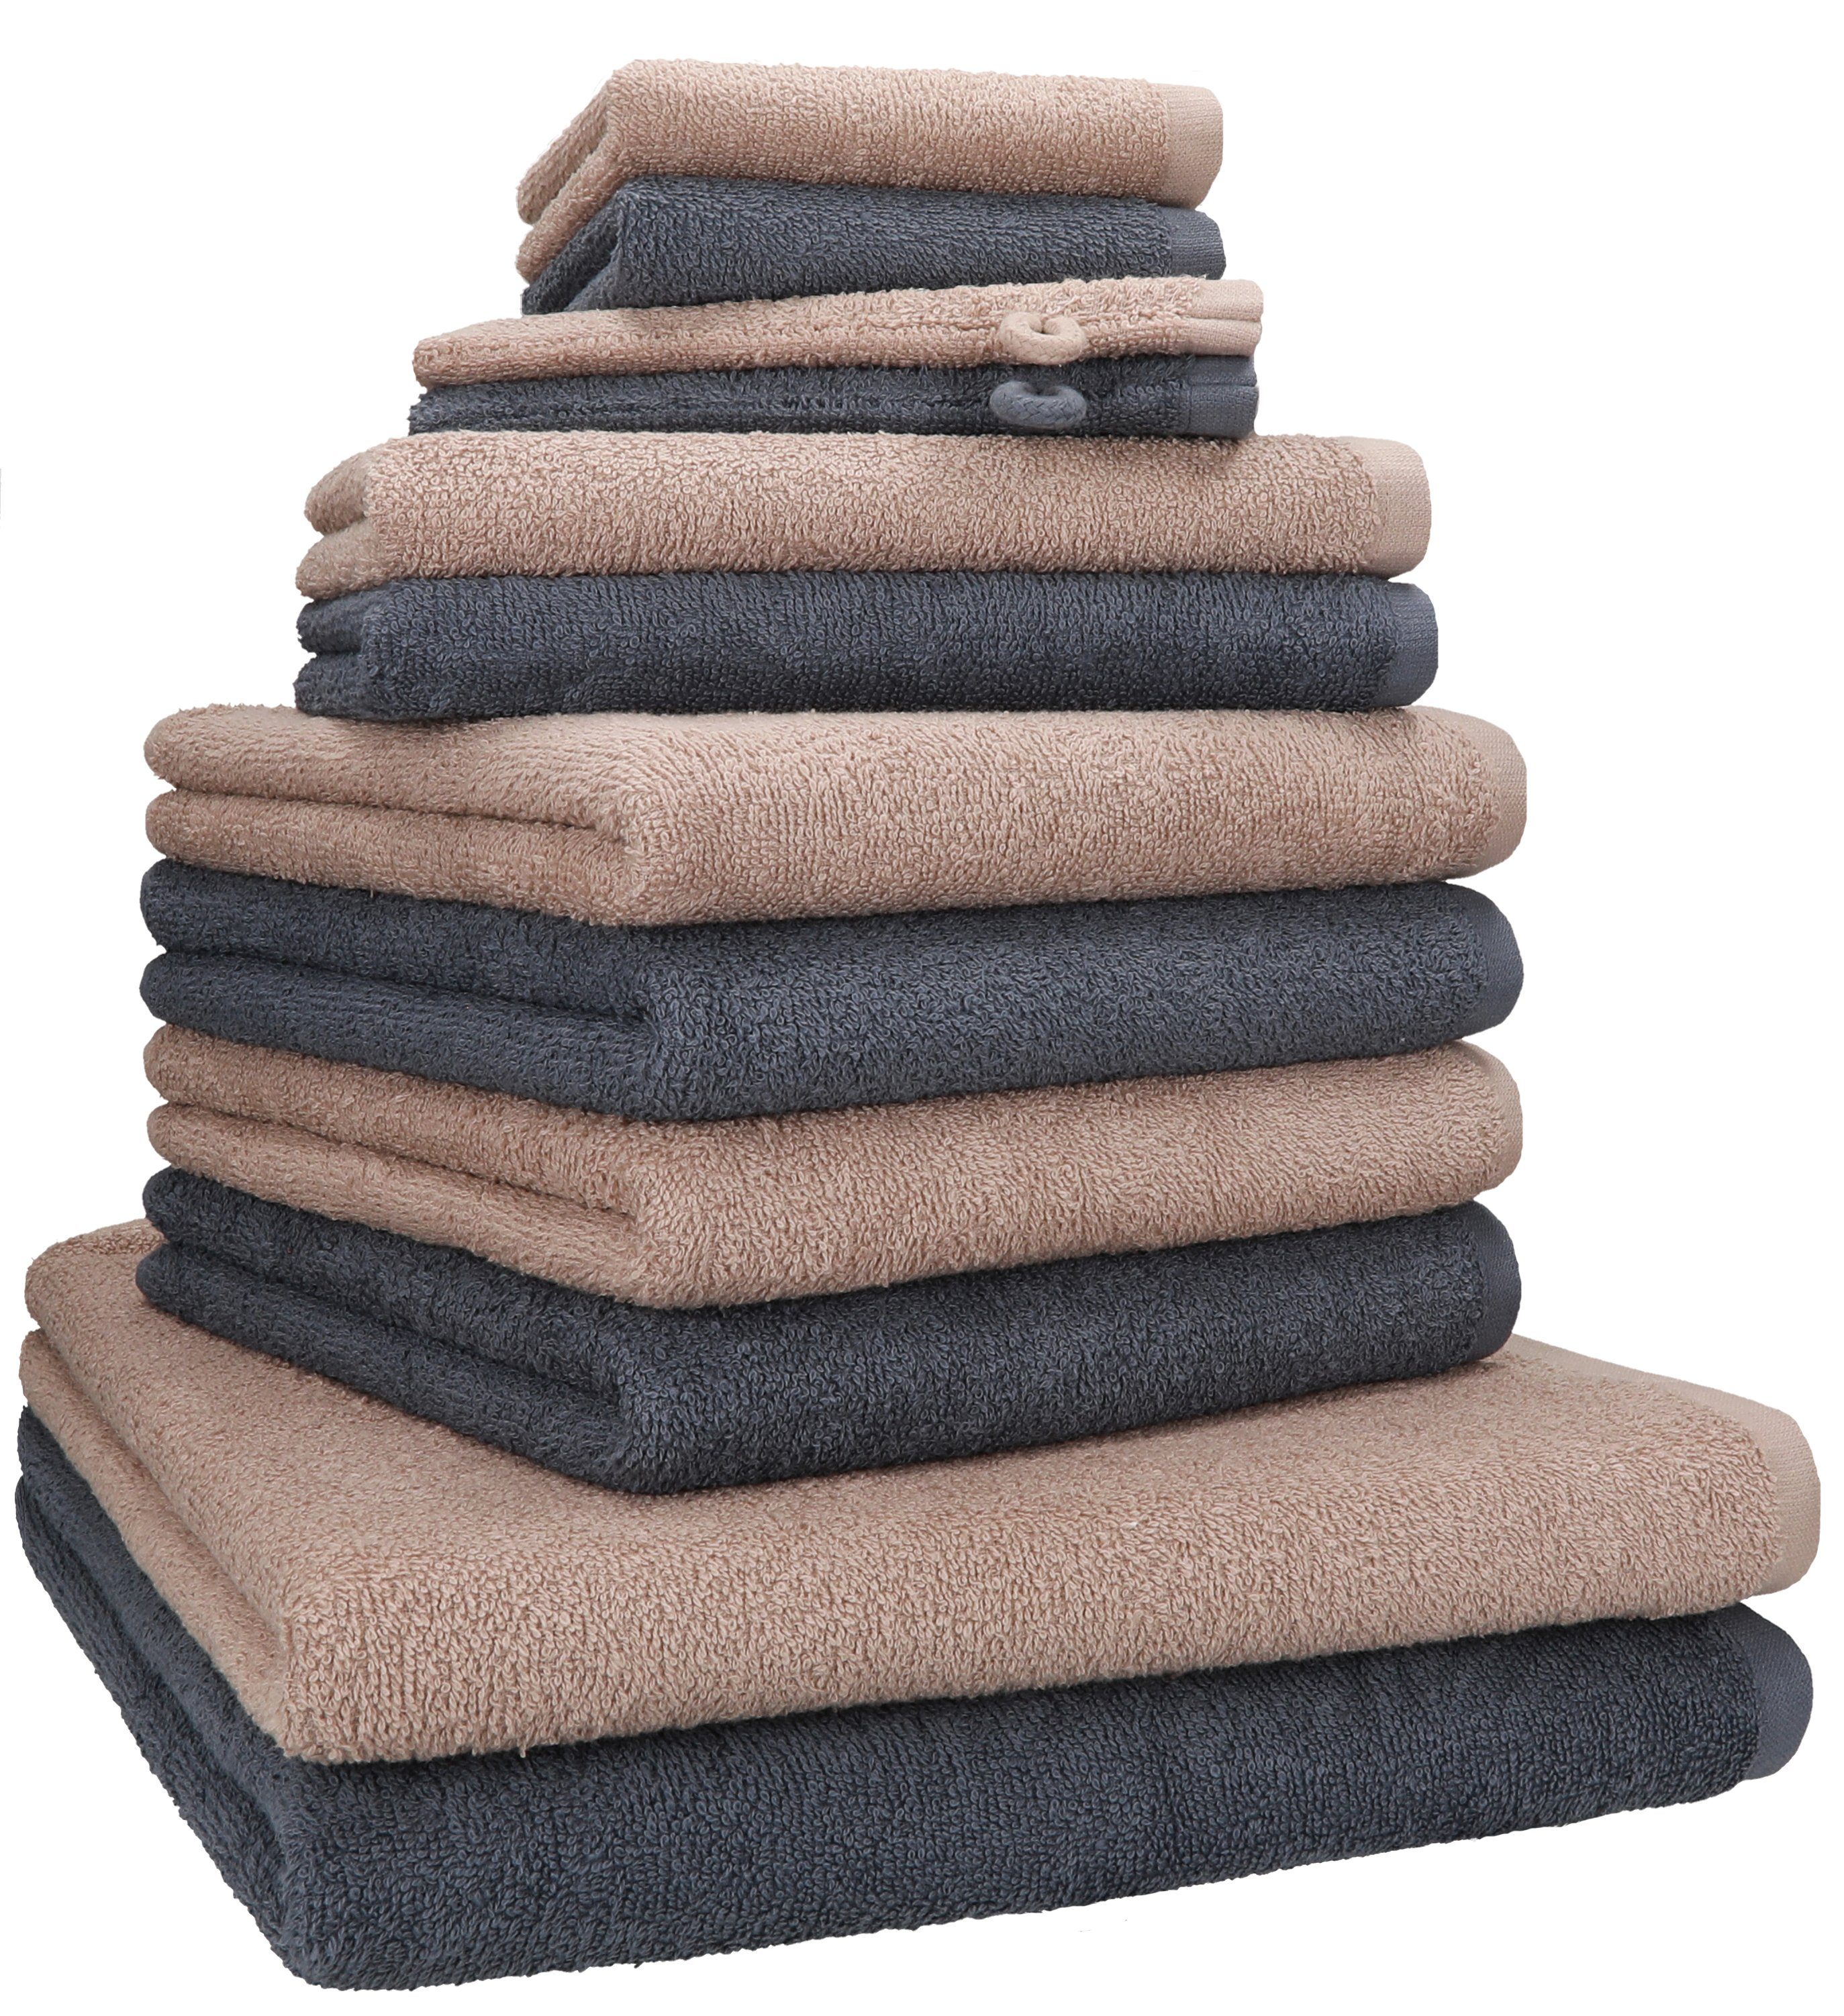 Handtuch Farbe Set 12 TLG. Betz 100% dunkelgrau, cappuccino Set Baumwolle Handtuch BERLIN -